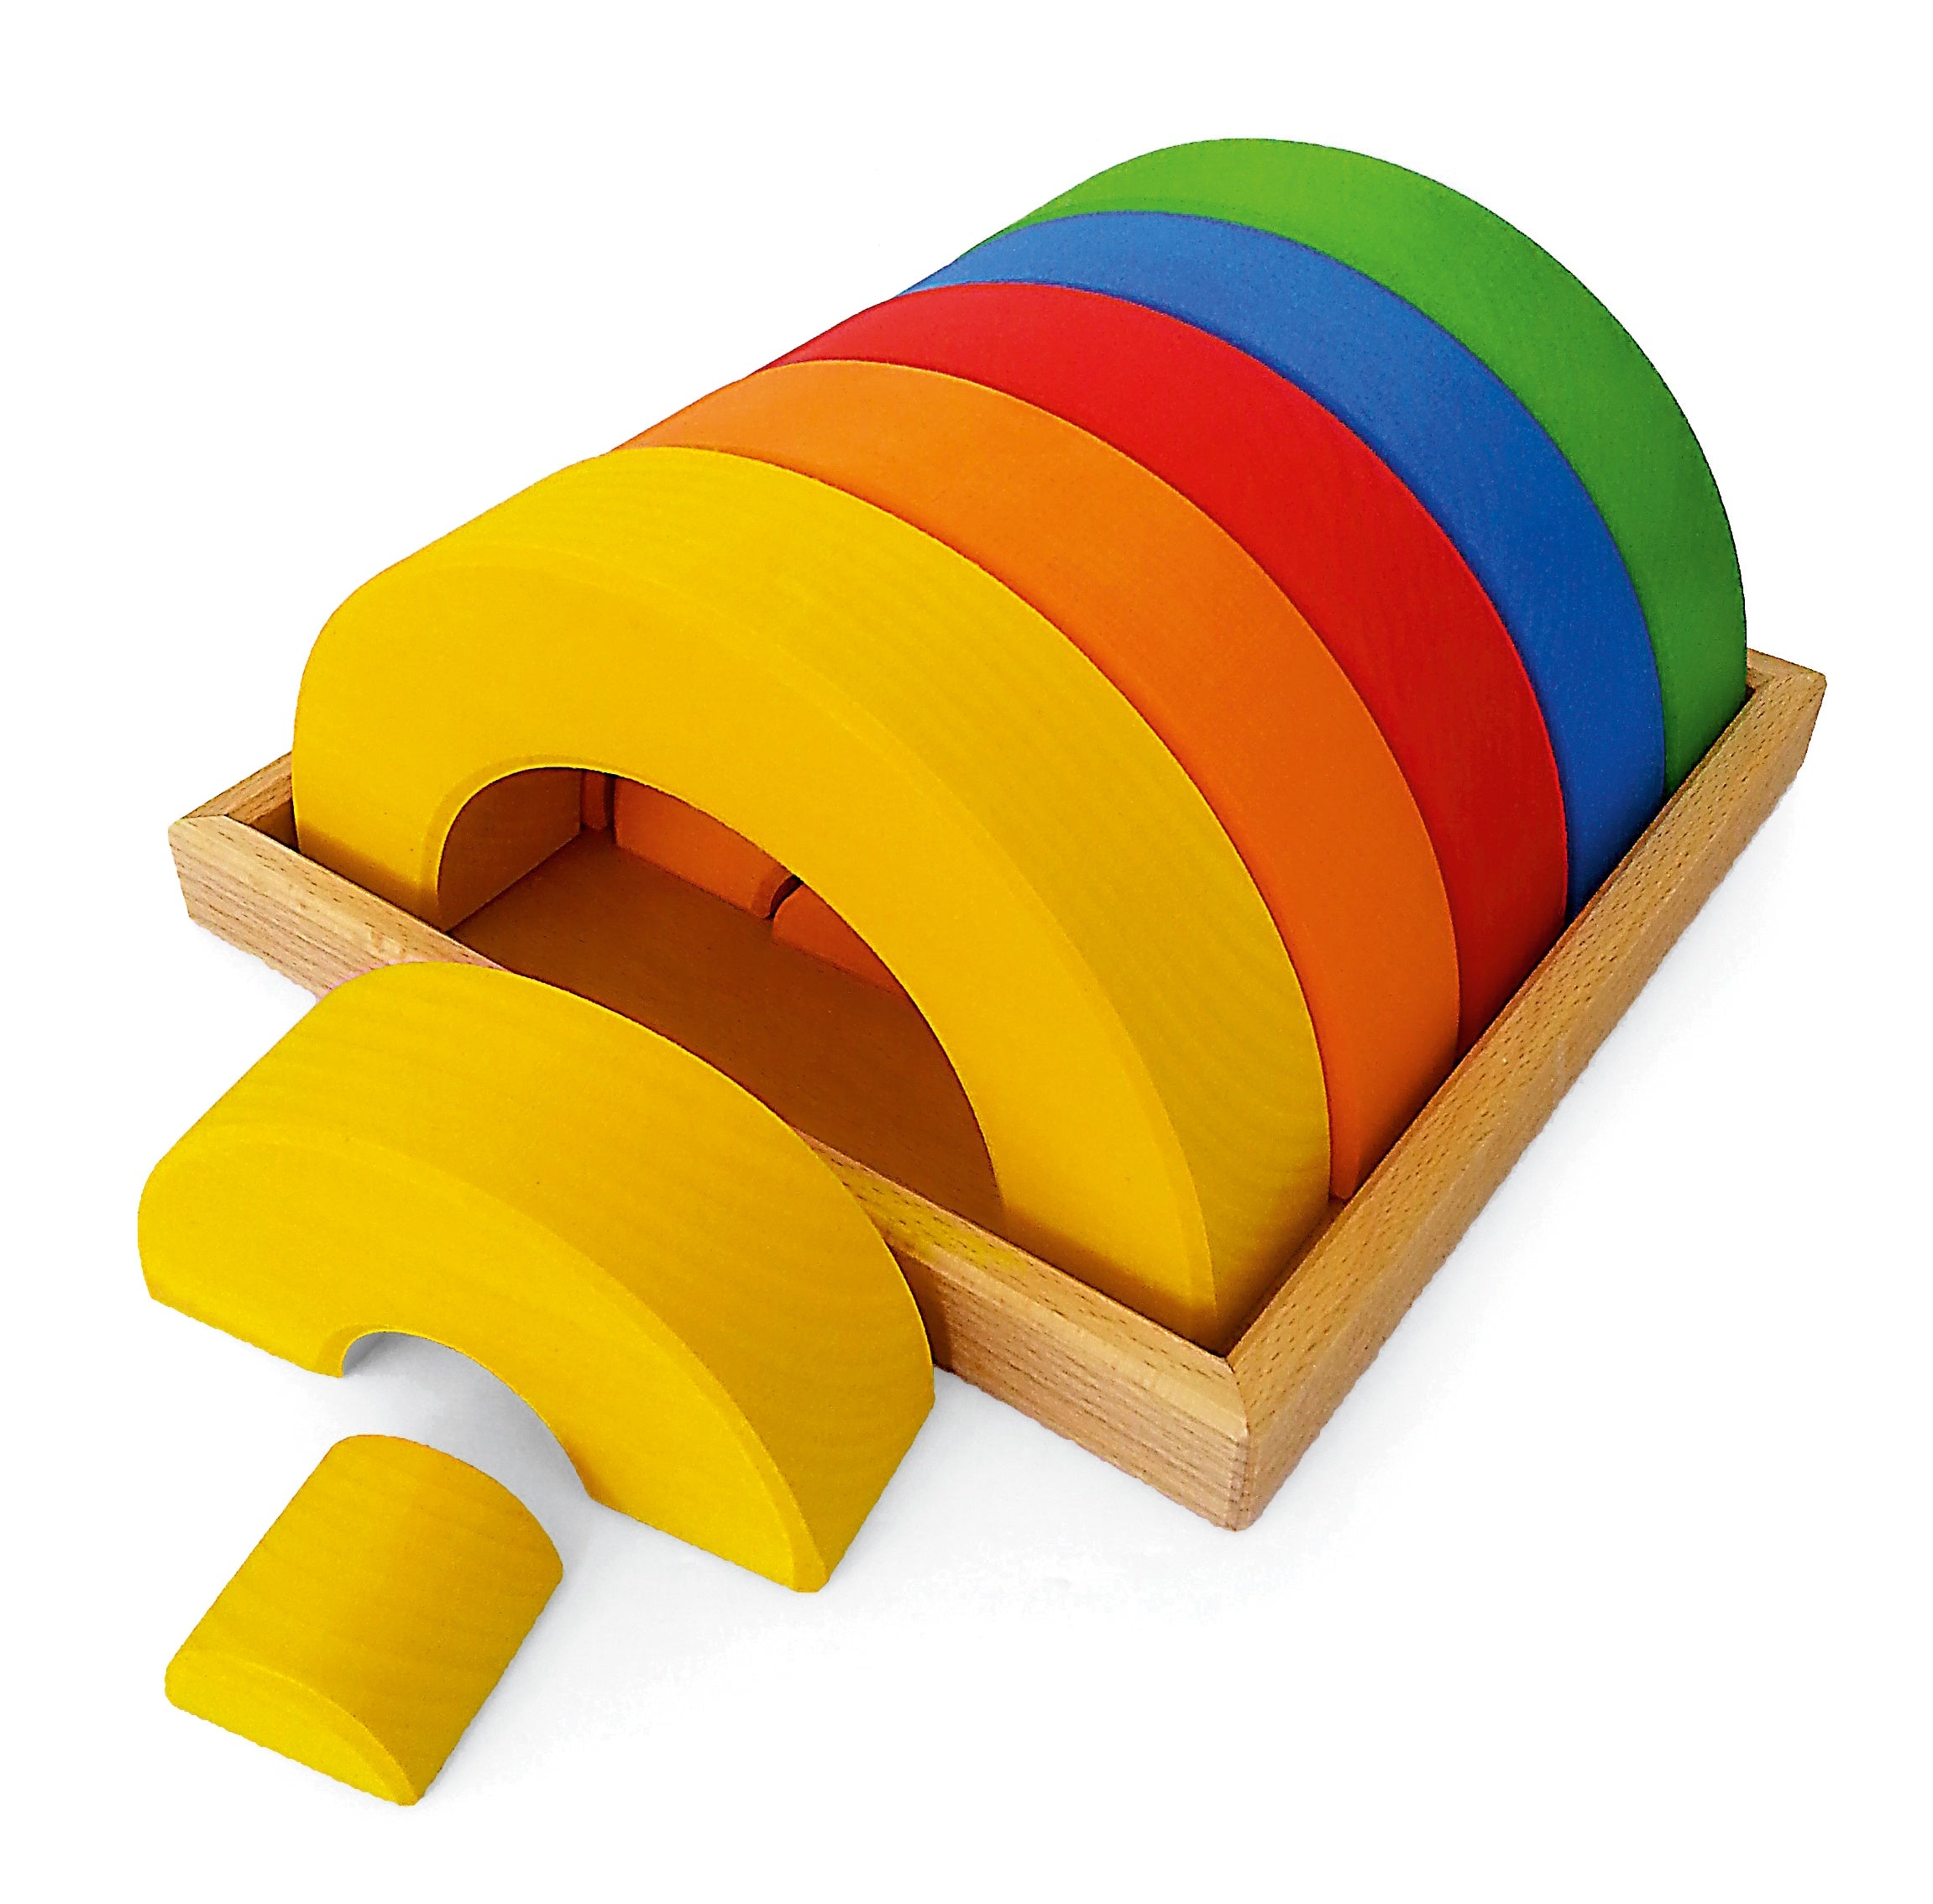 Bauspiel Junior Rainbow - Arch's - 15 pcs - Wooden Building